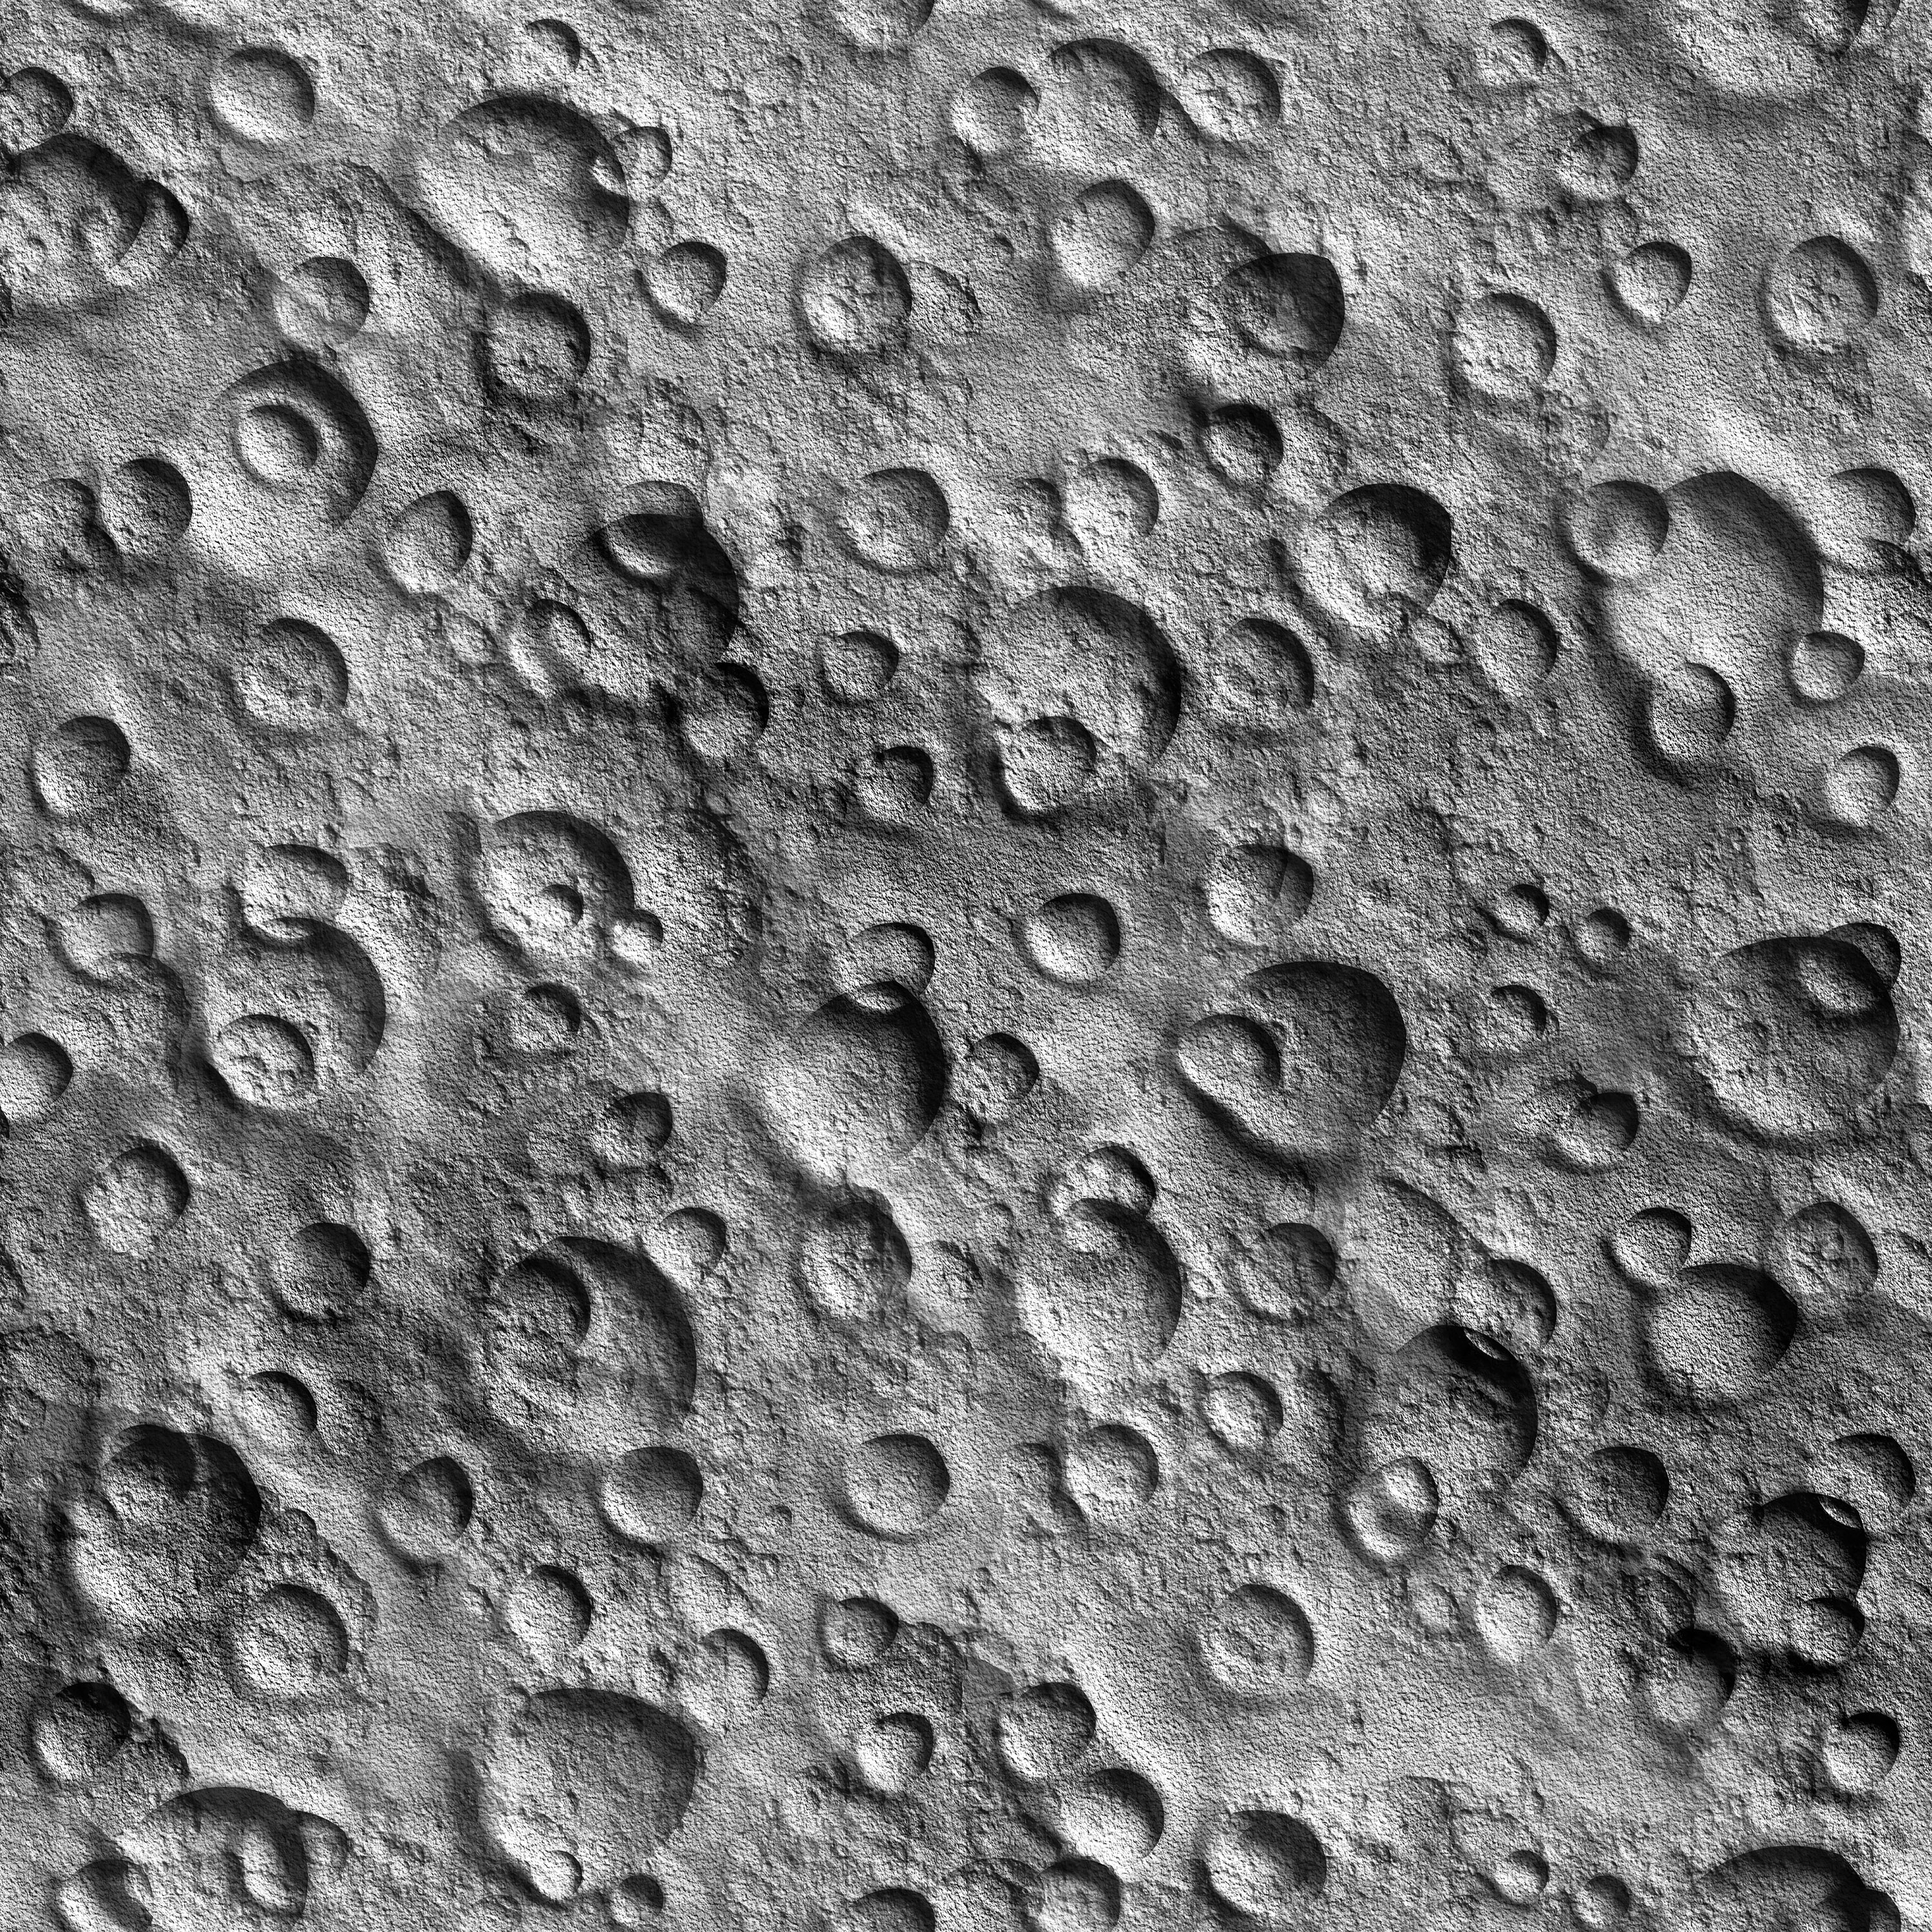 105-16526530-surface-of-the-moon-3d-illustration.jpg